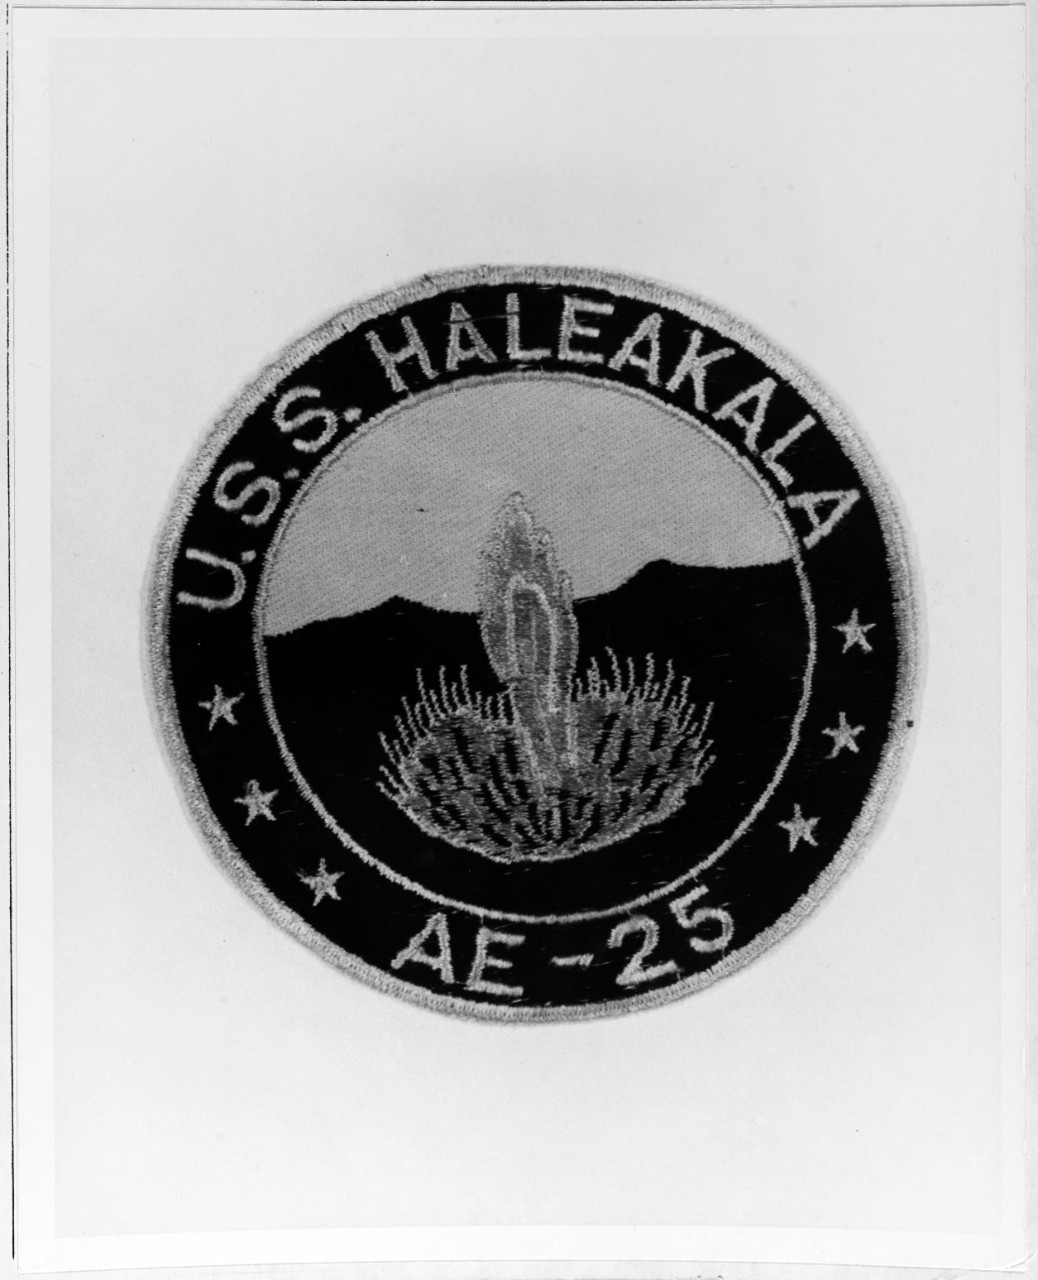 Insignia:  USS HALEAKALA (AE-25)